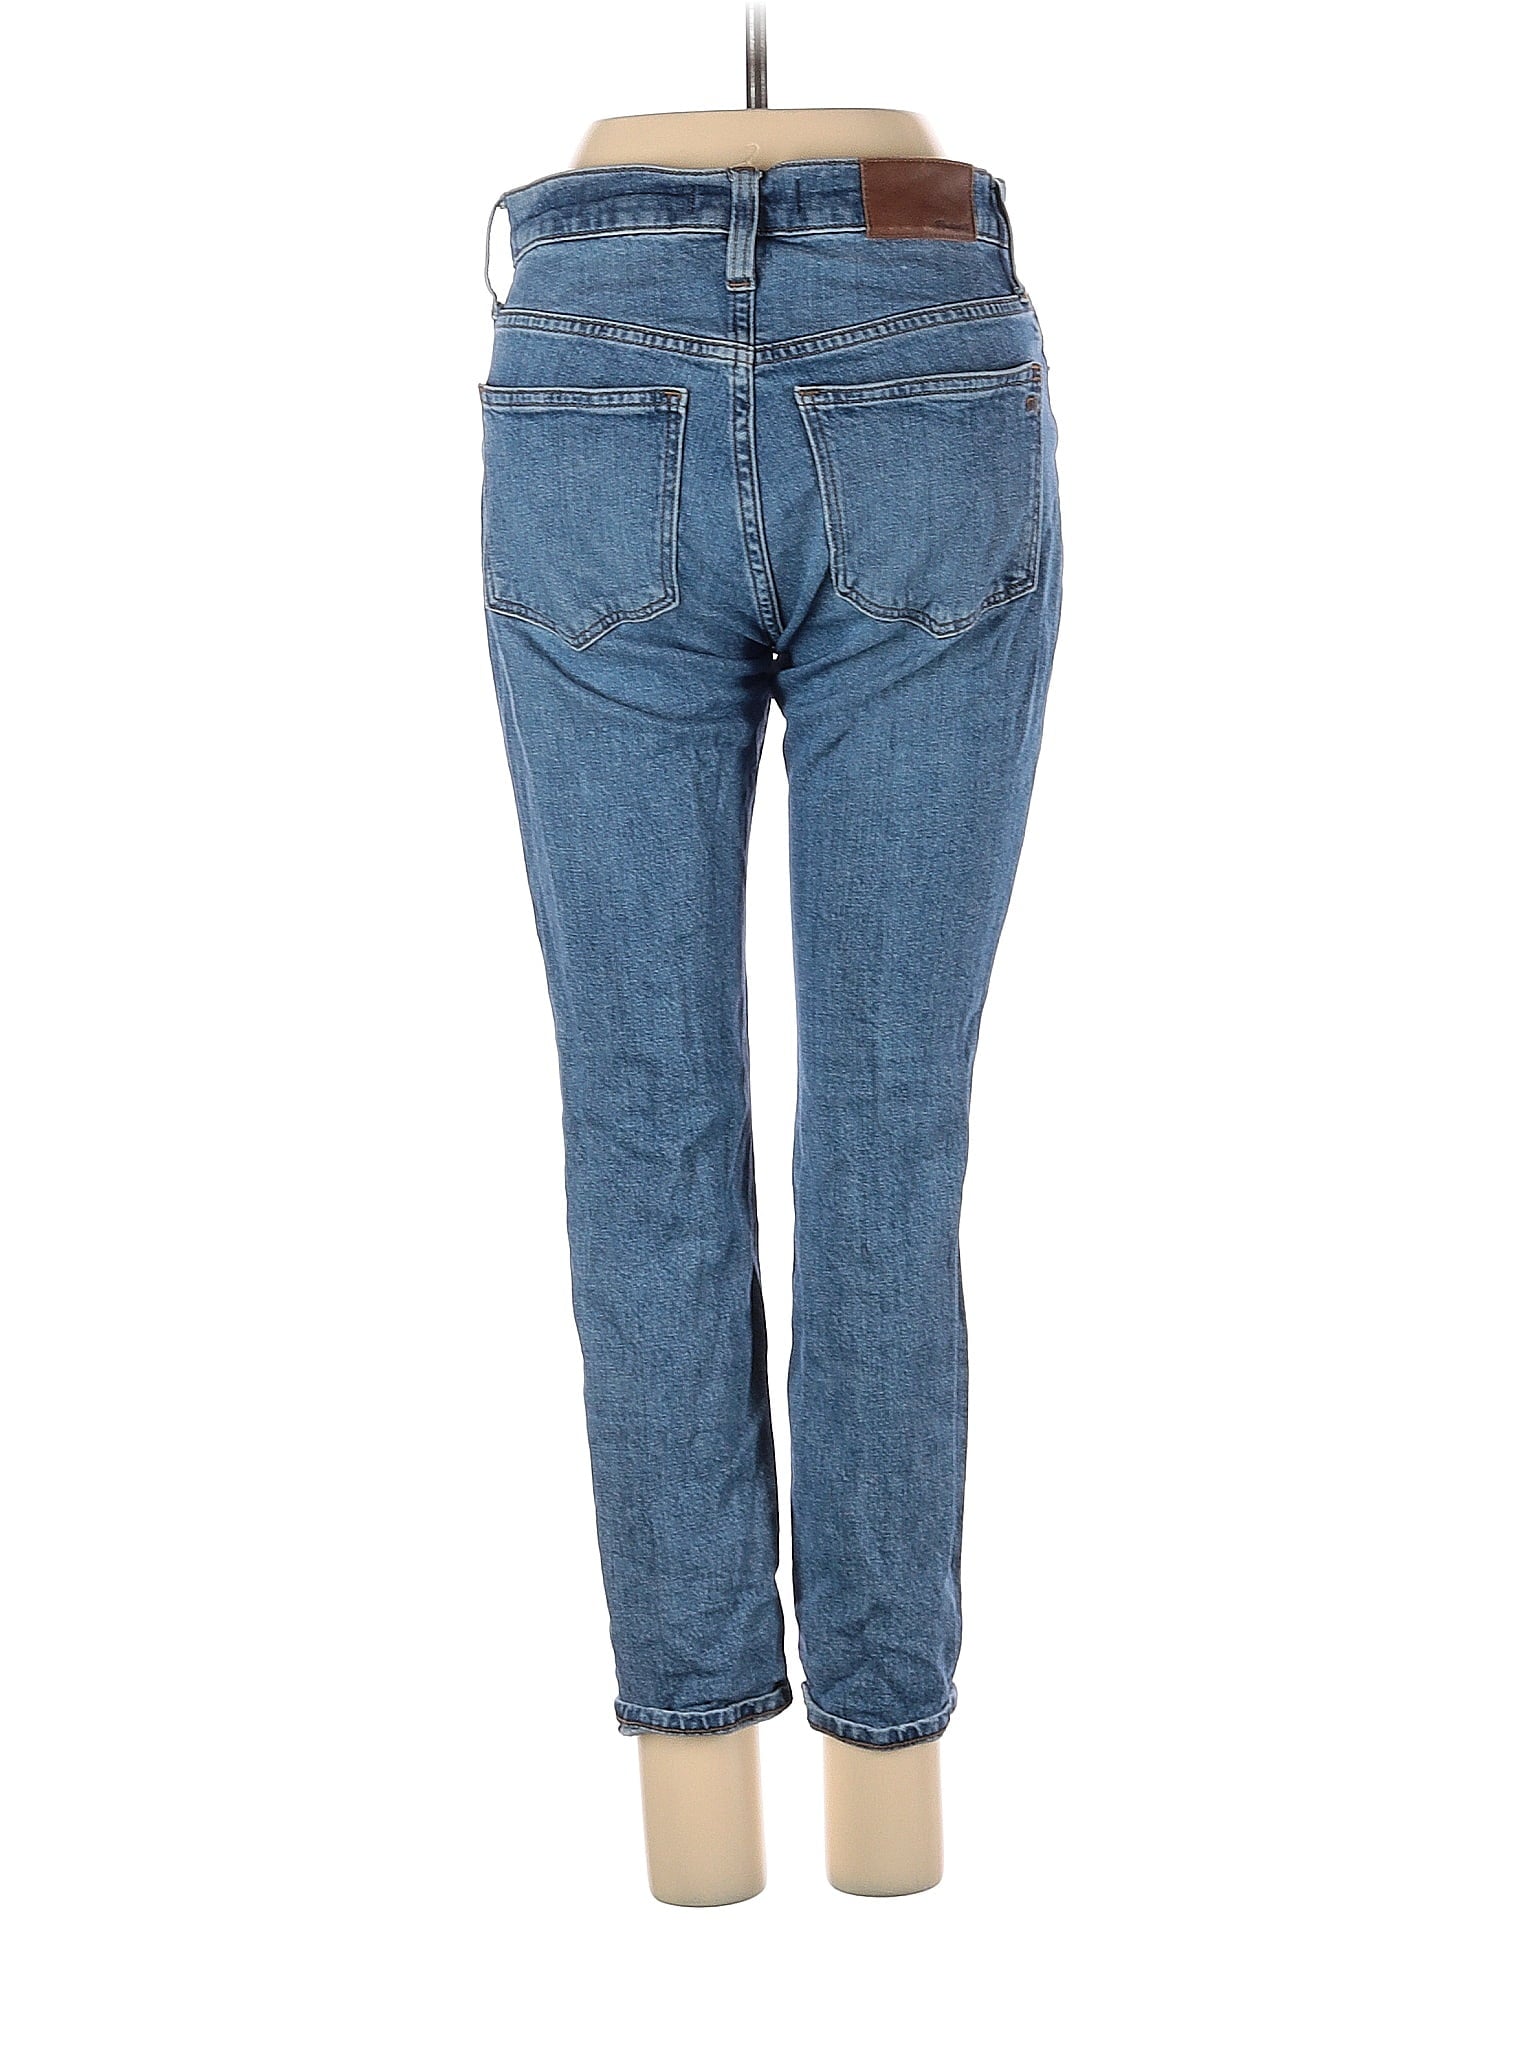 High-Rise Boyjeans Jeans in Medium Wash waist size - 25 P